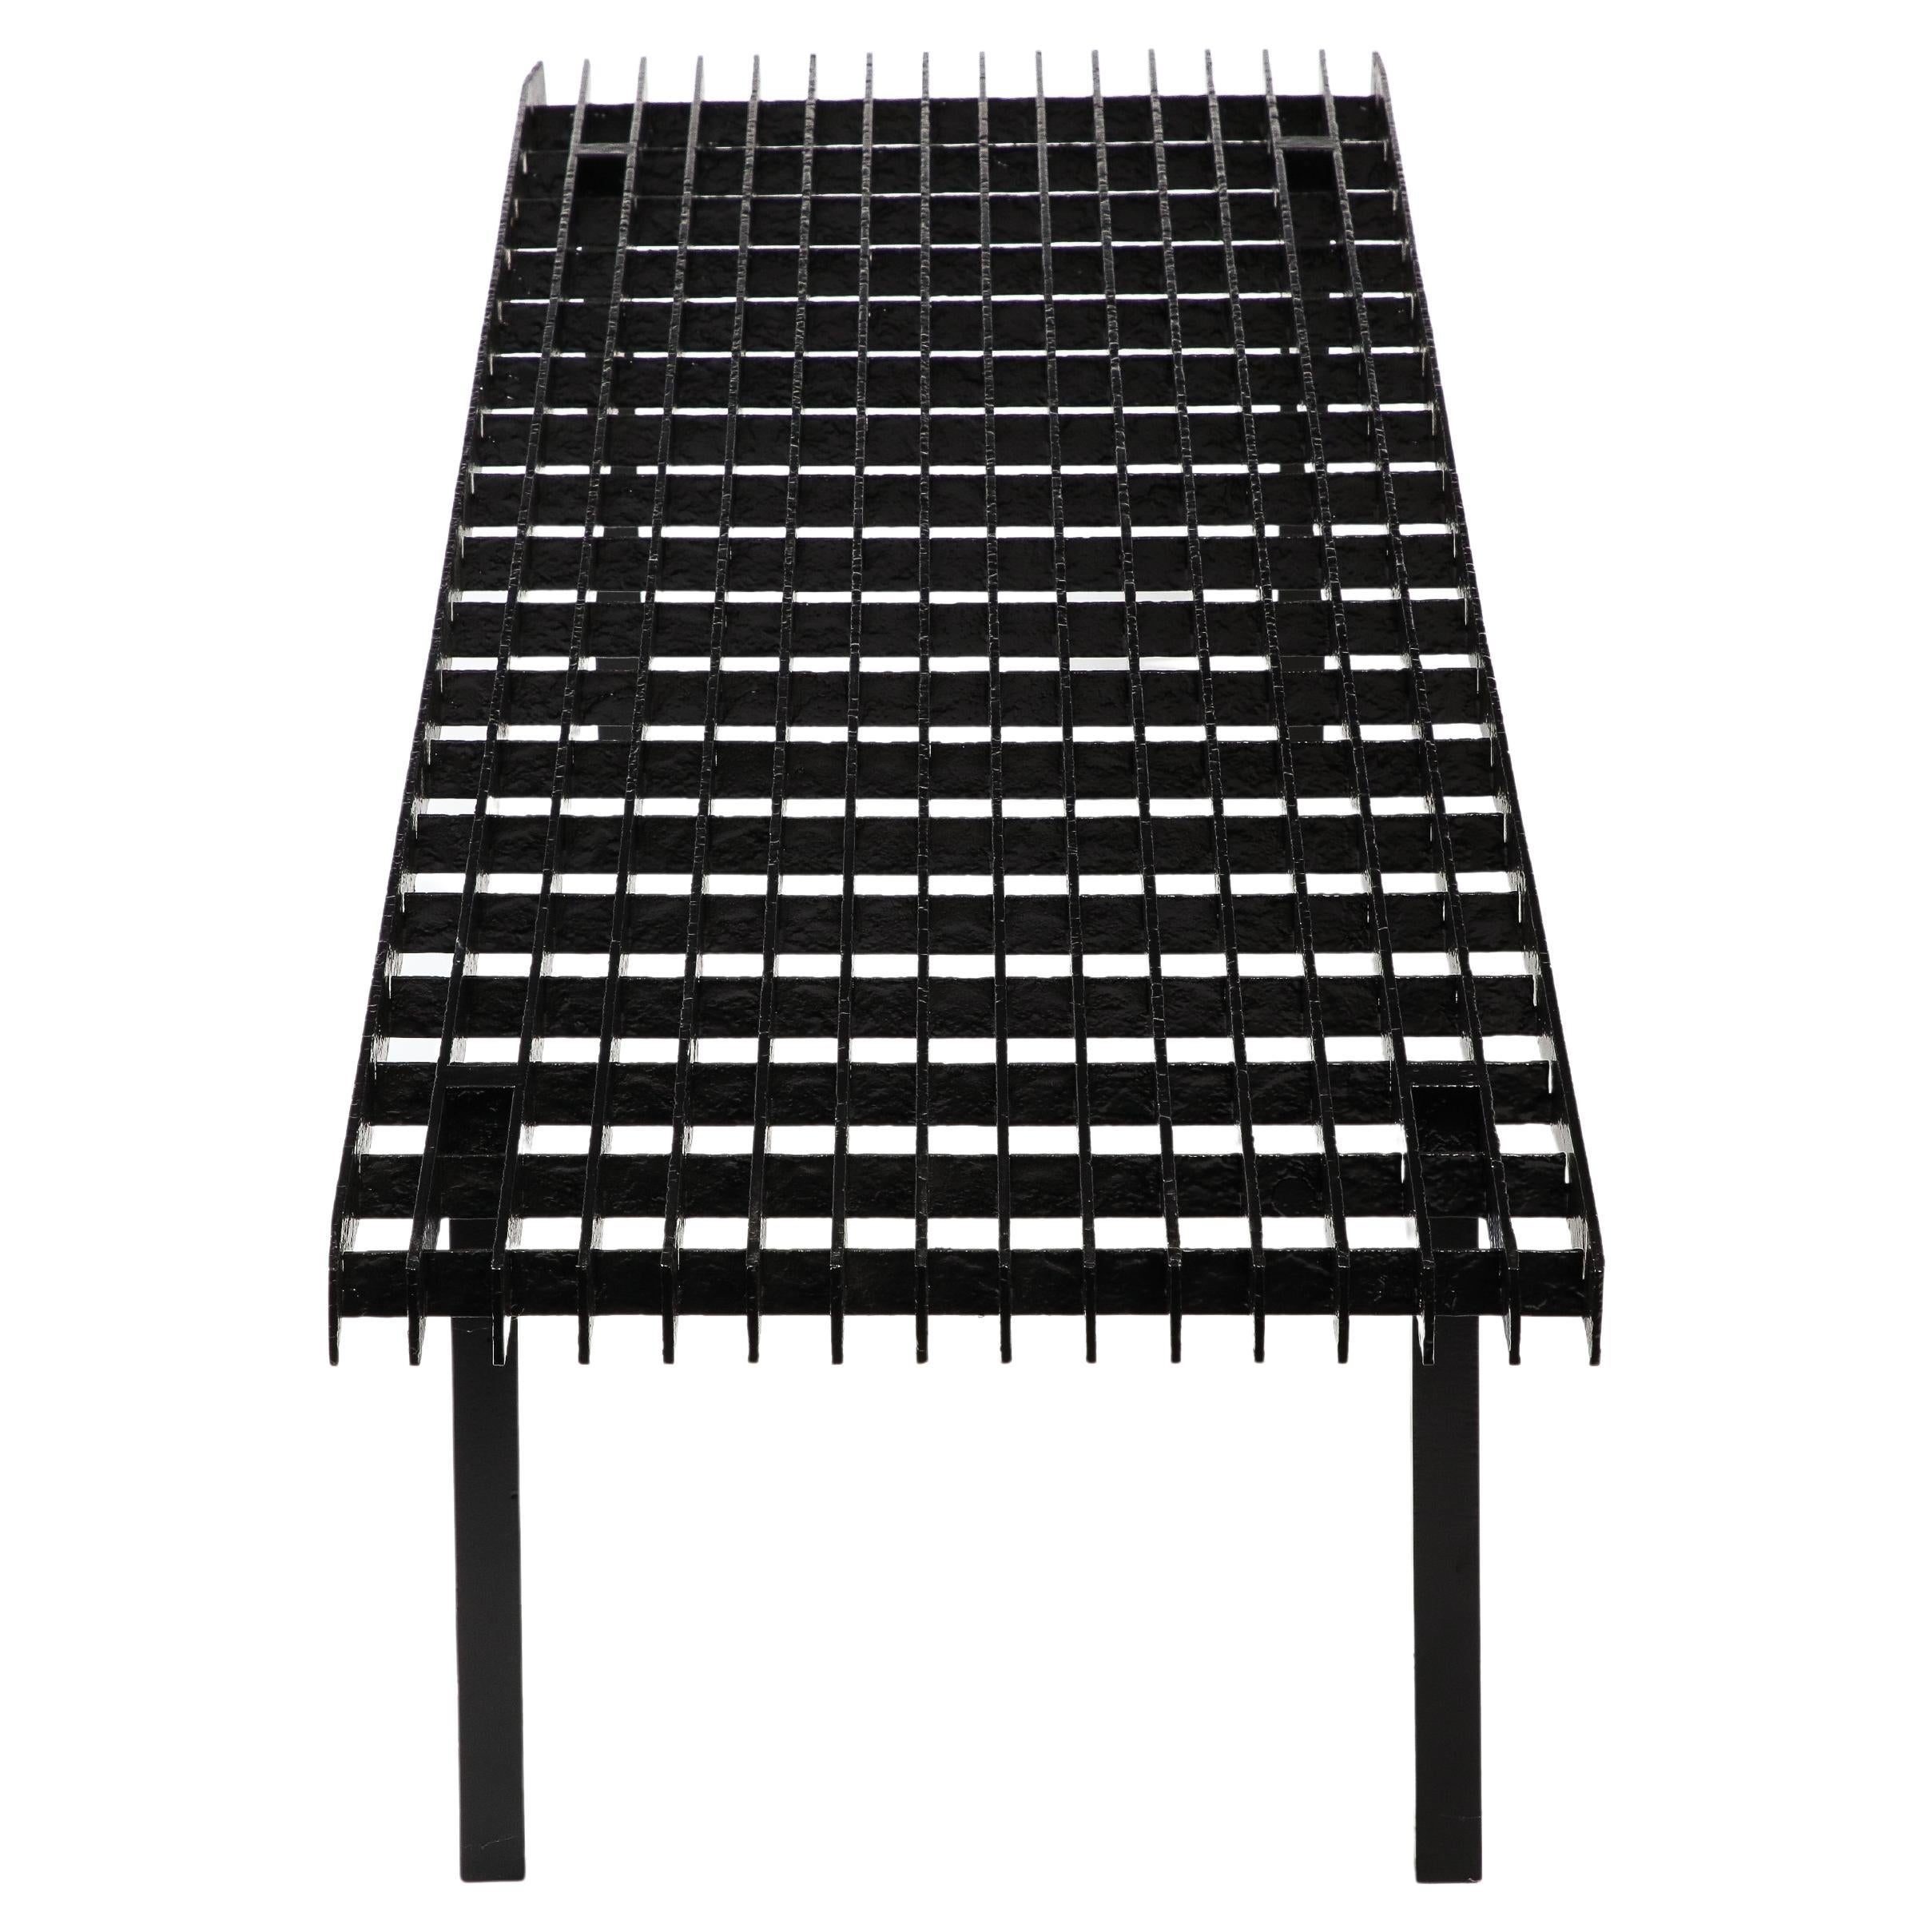 Steel slat bench made of welded steel bars, enameled in black.